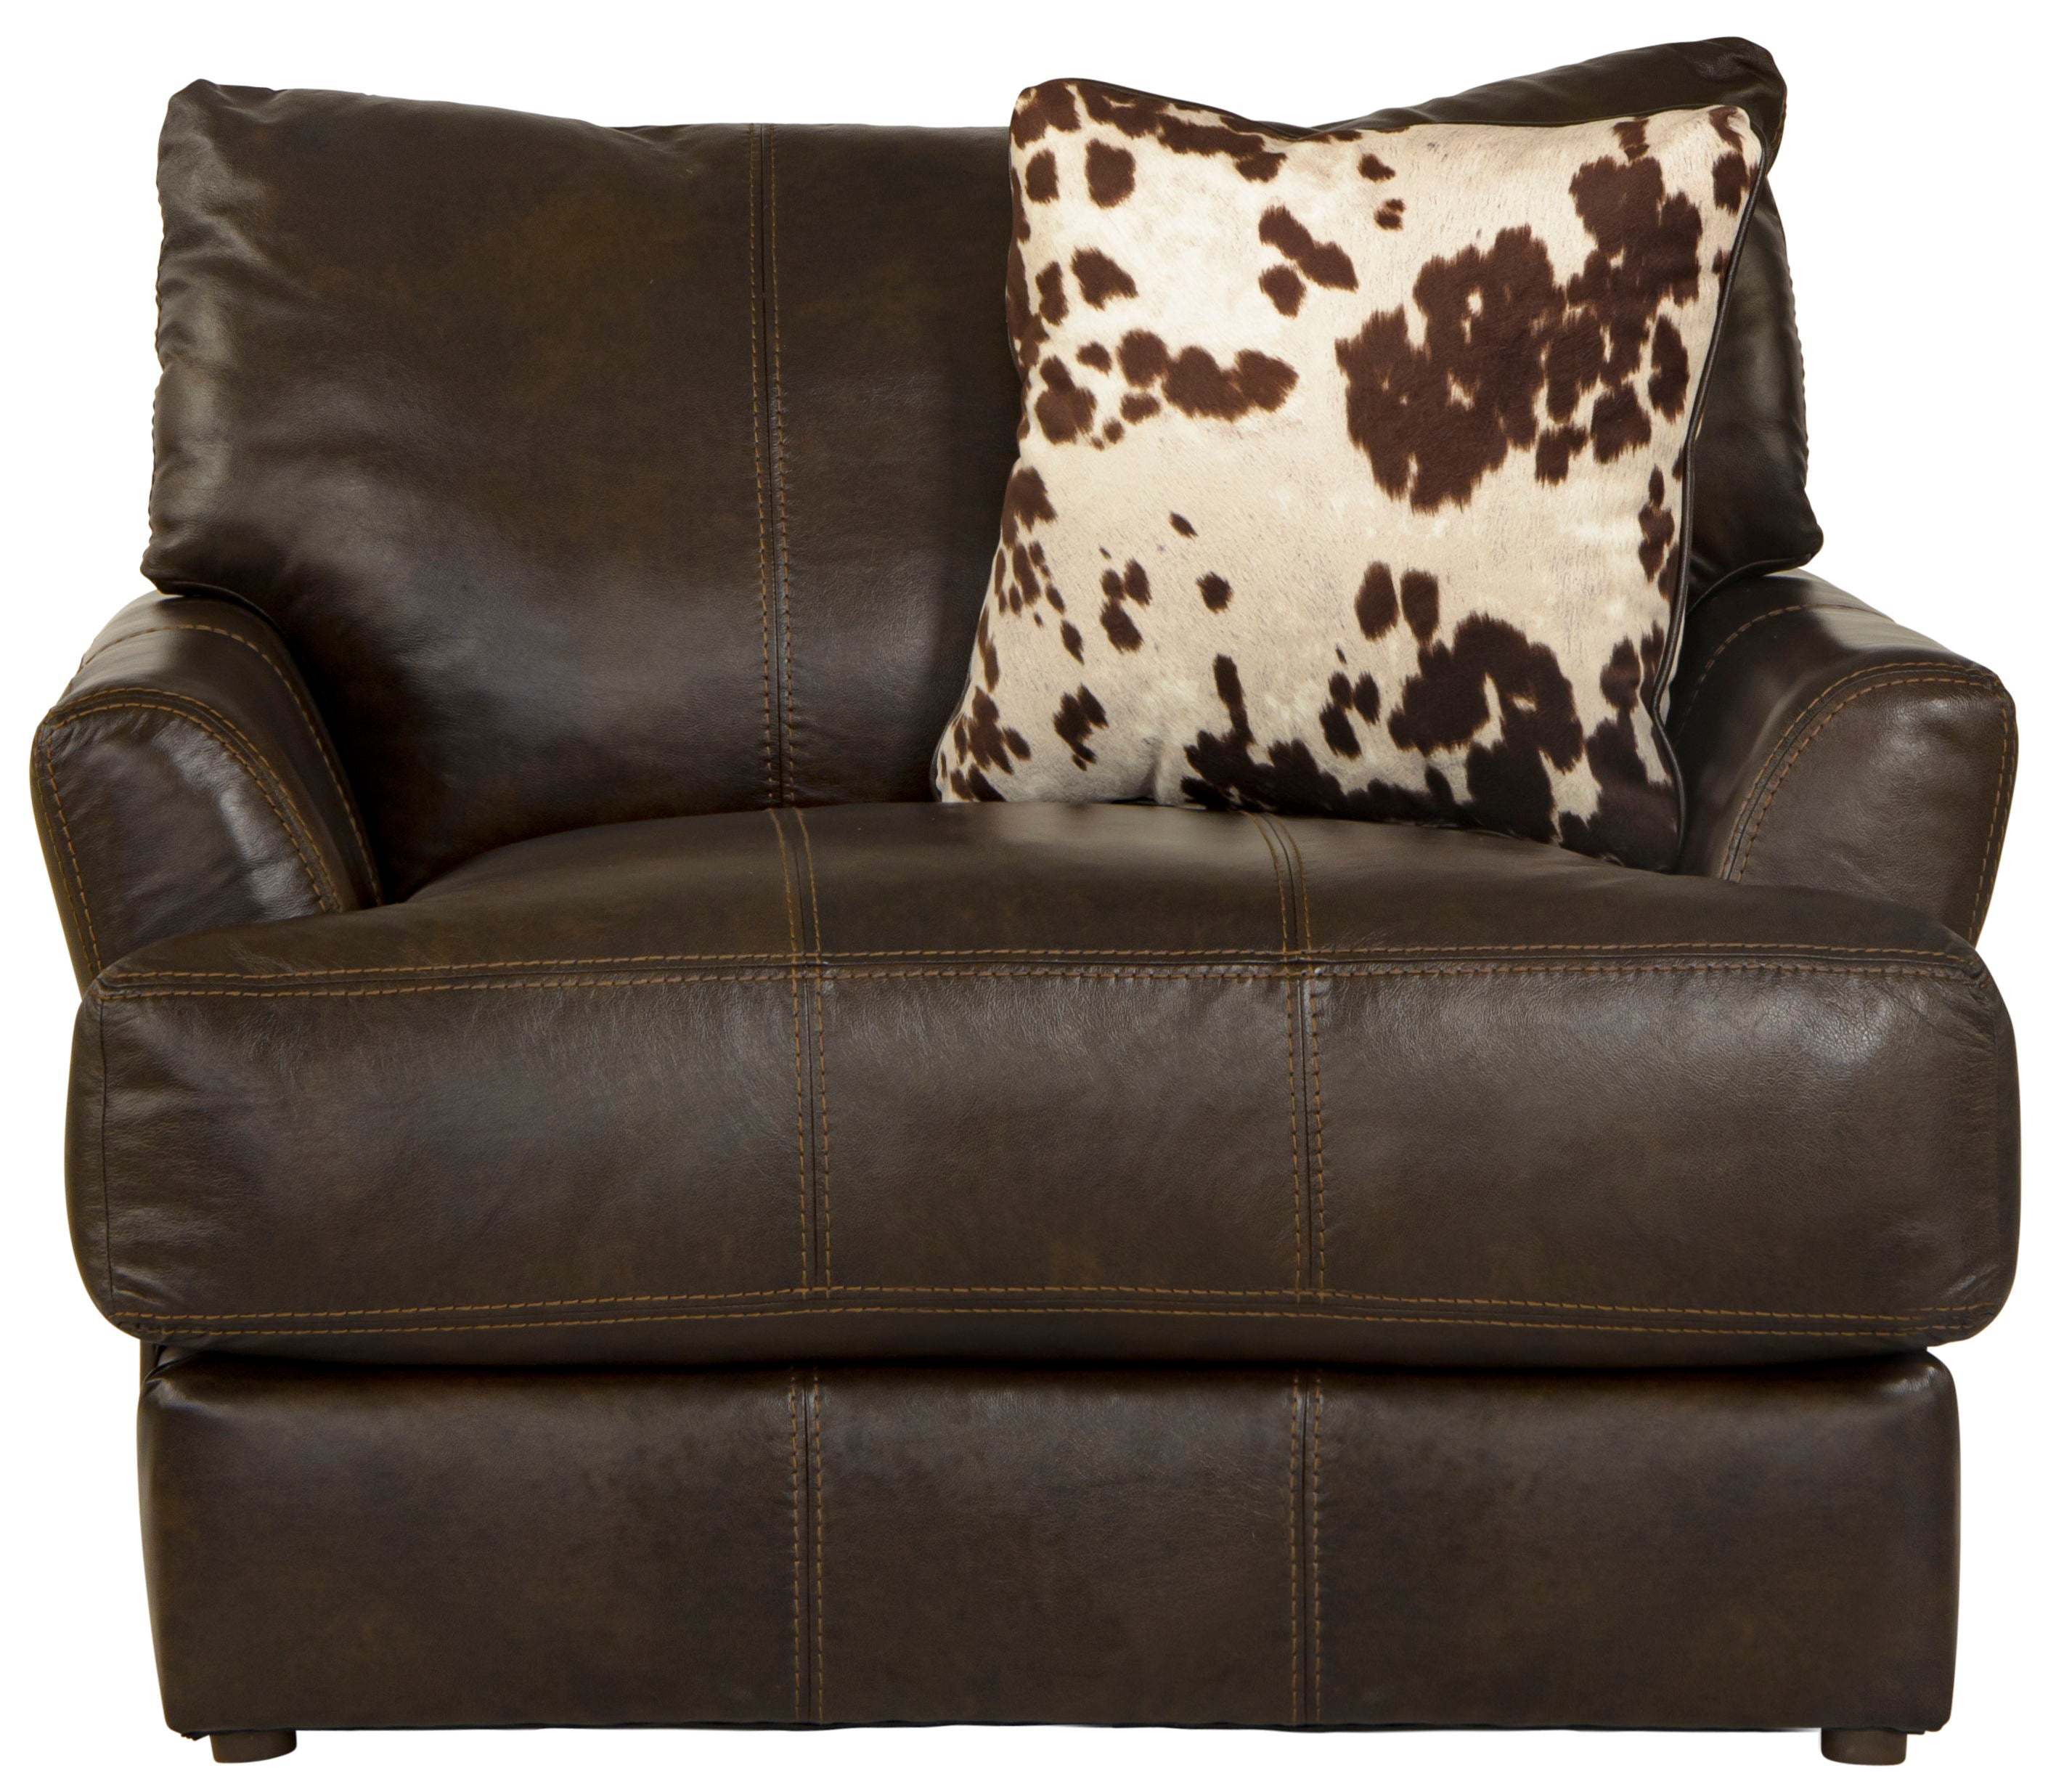 Pavia - Top Grain Italian Leather Chair With Cuddler Cushions - Cocoa